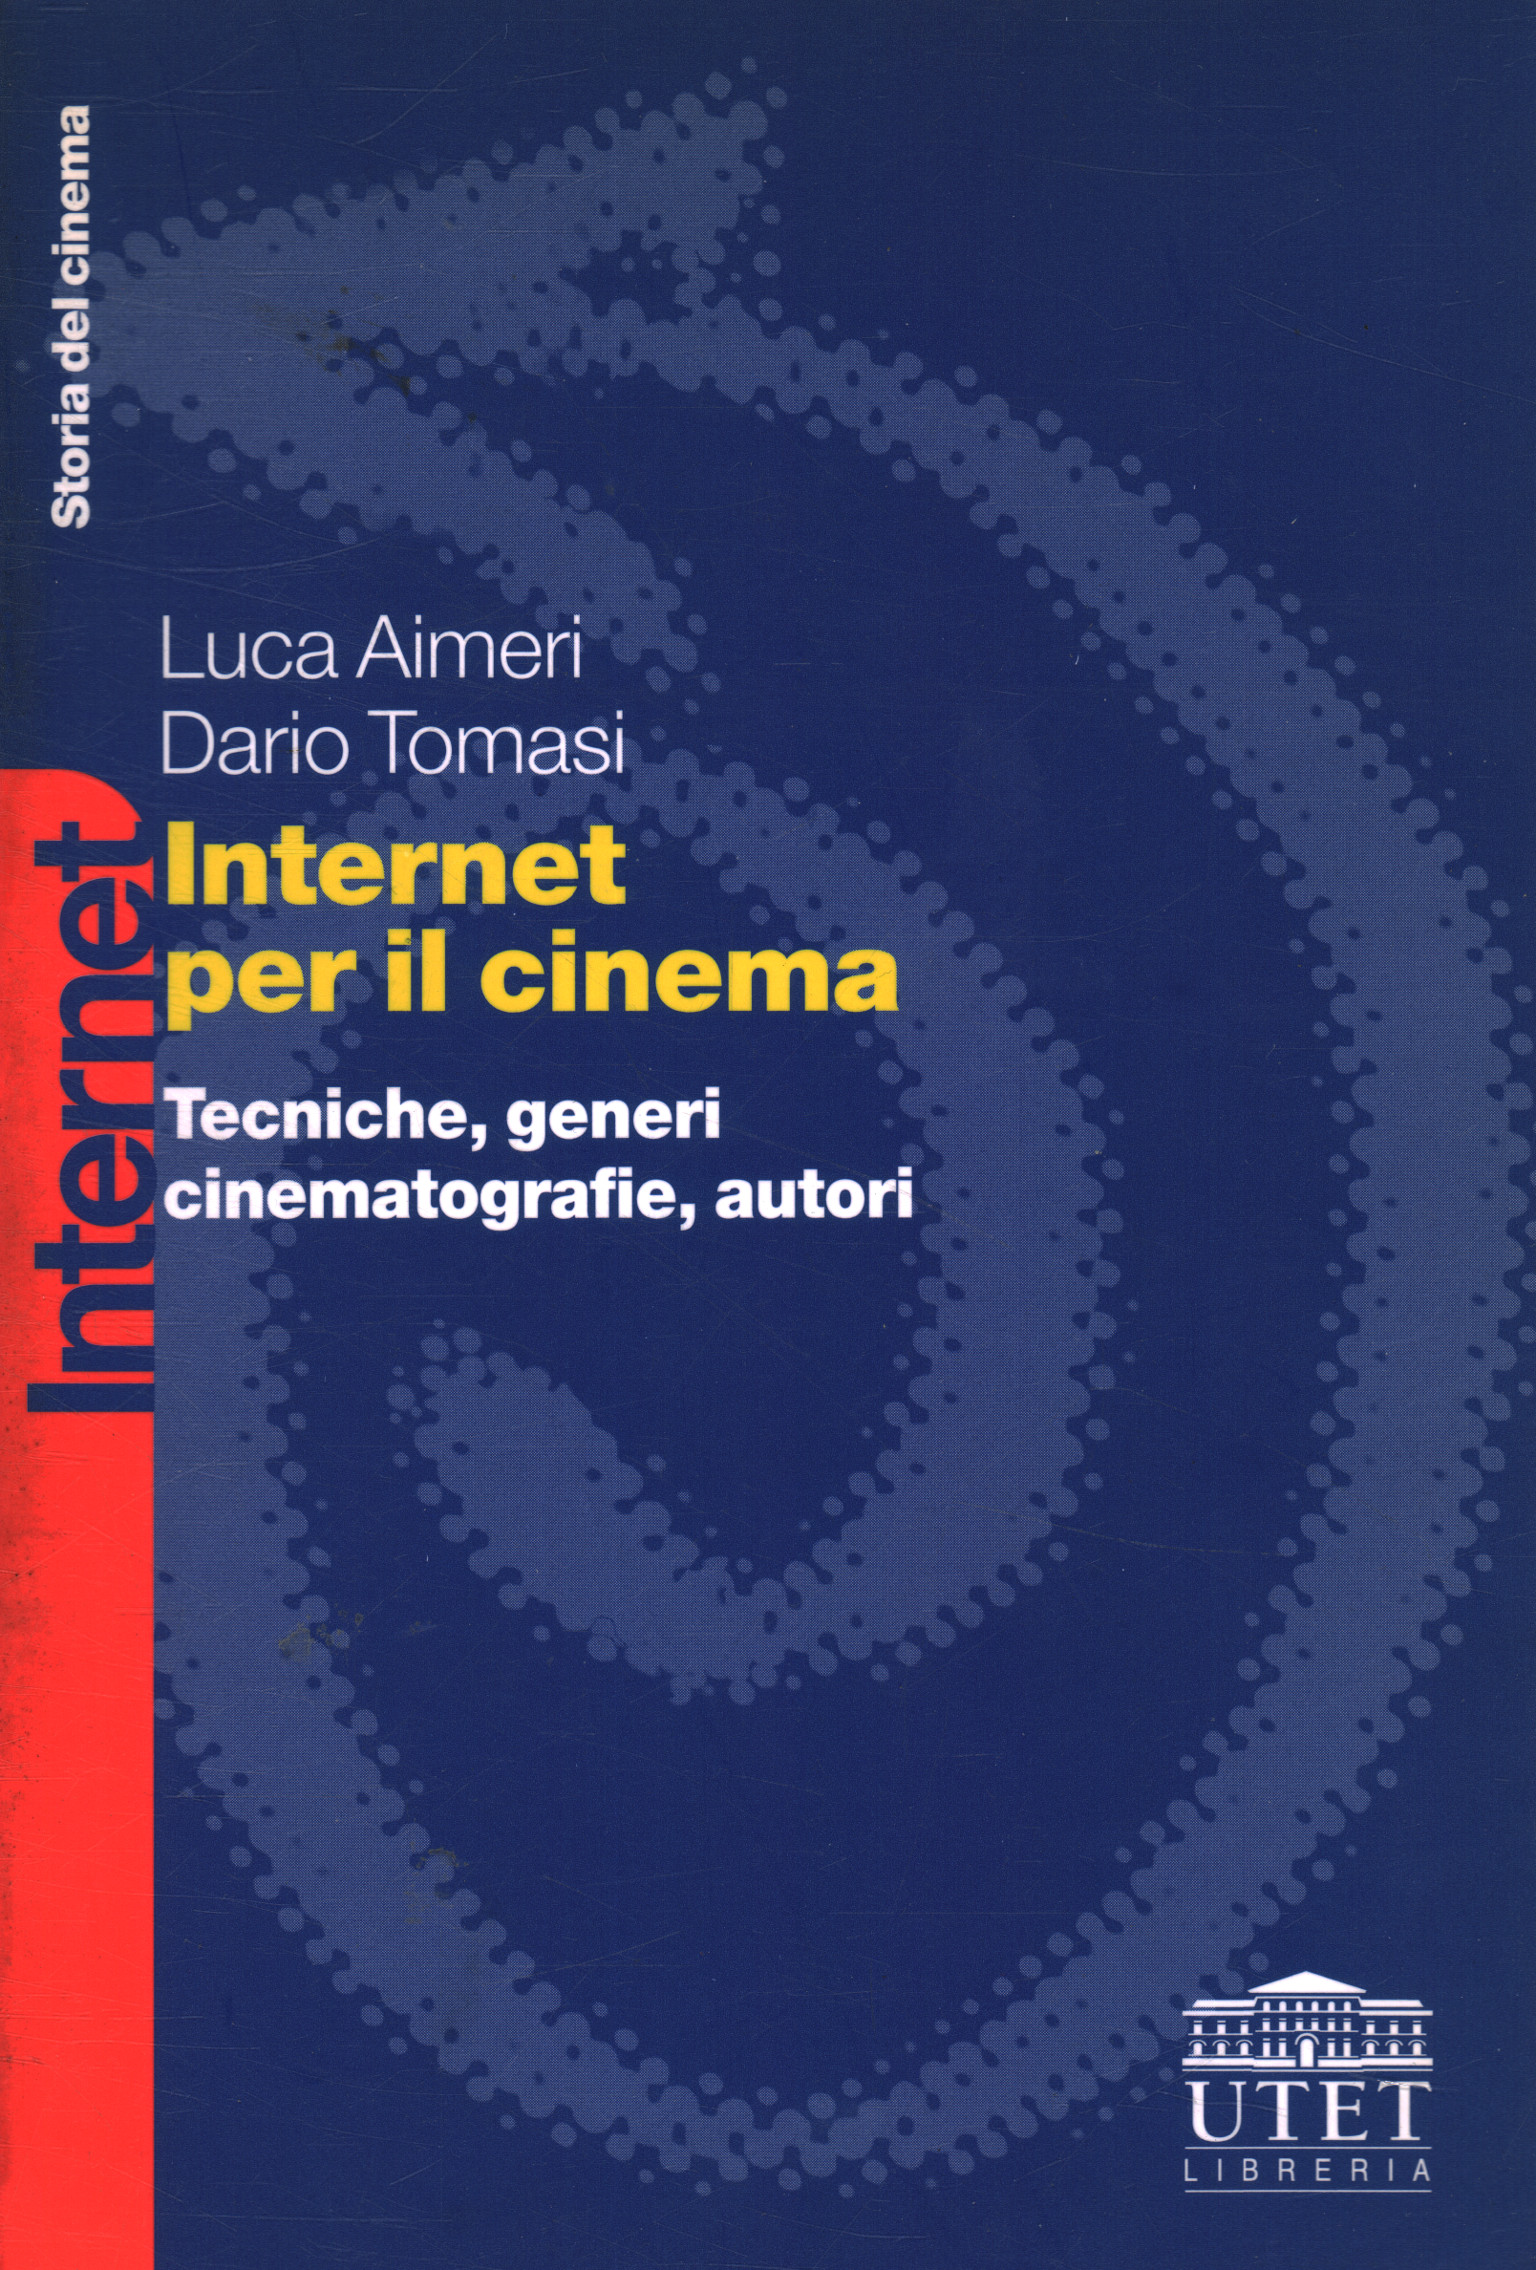 Internet for cinema